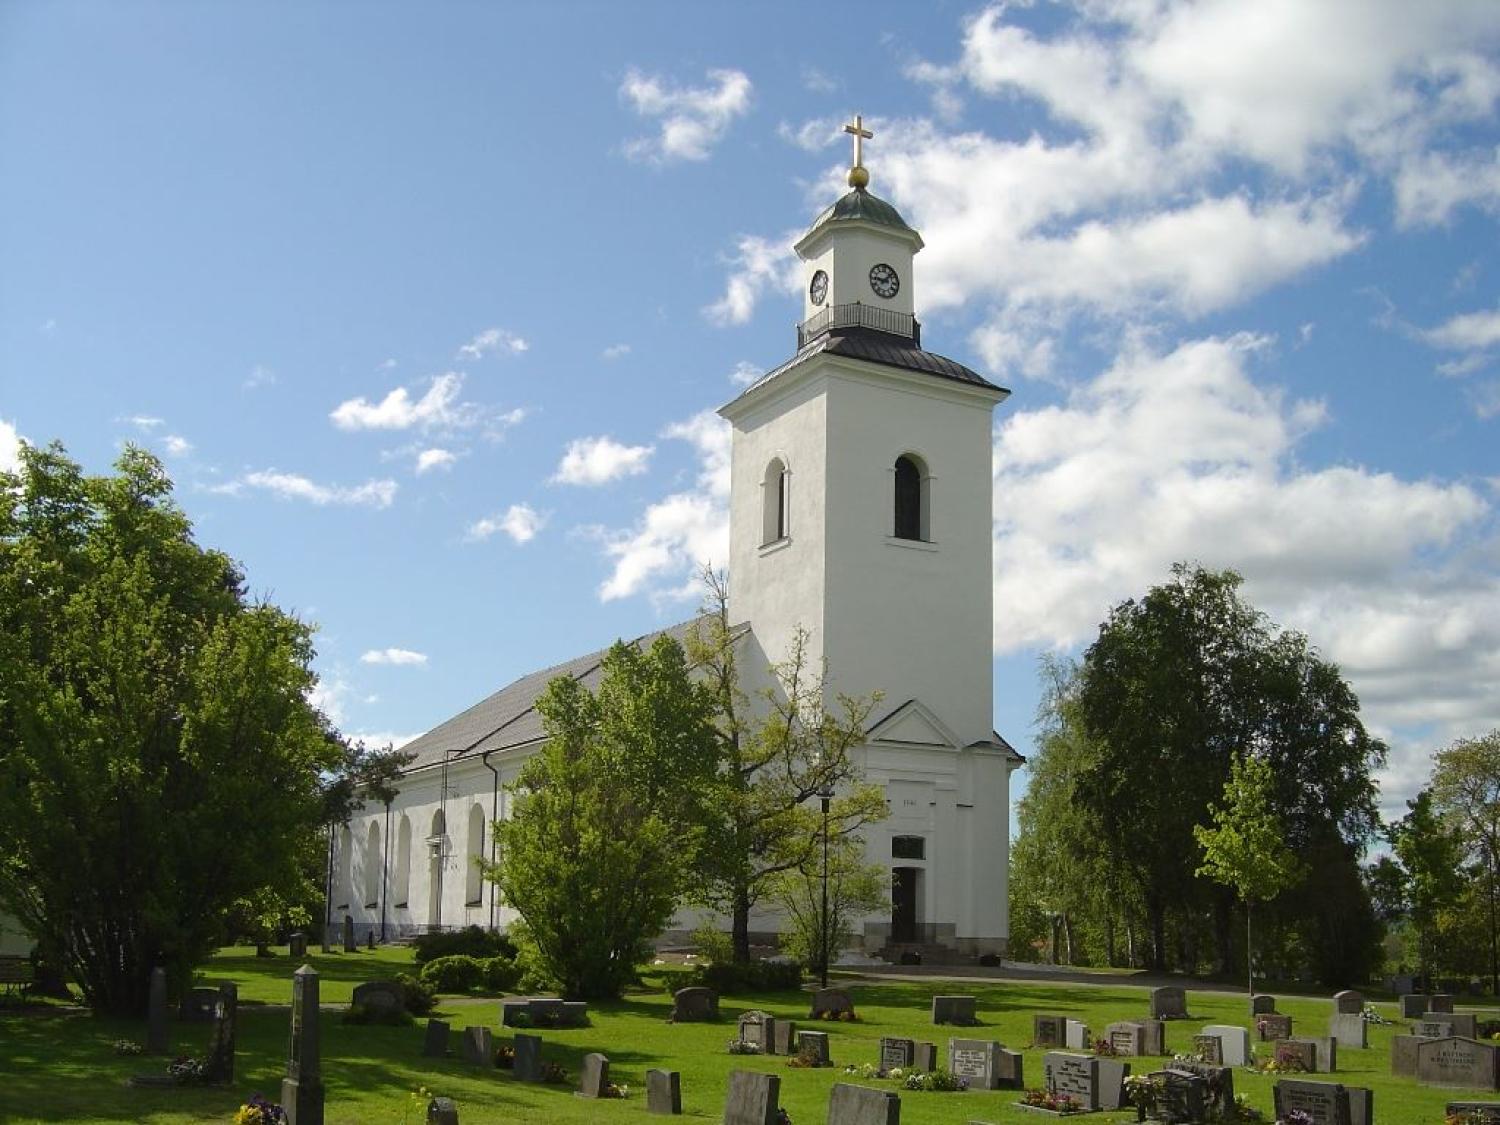 Bergsjö Church